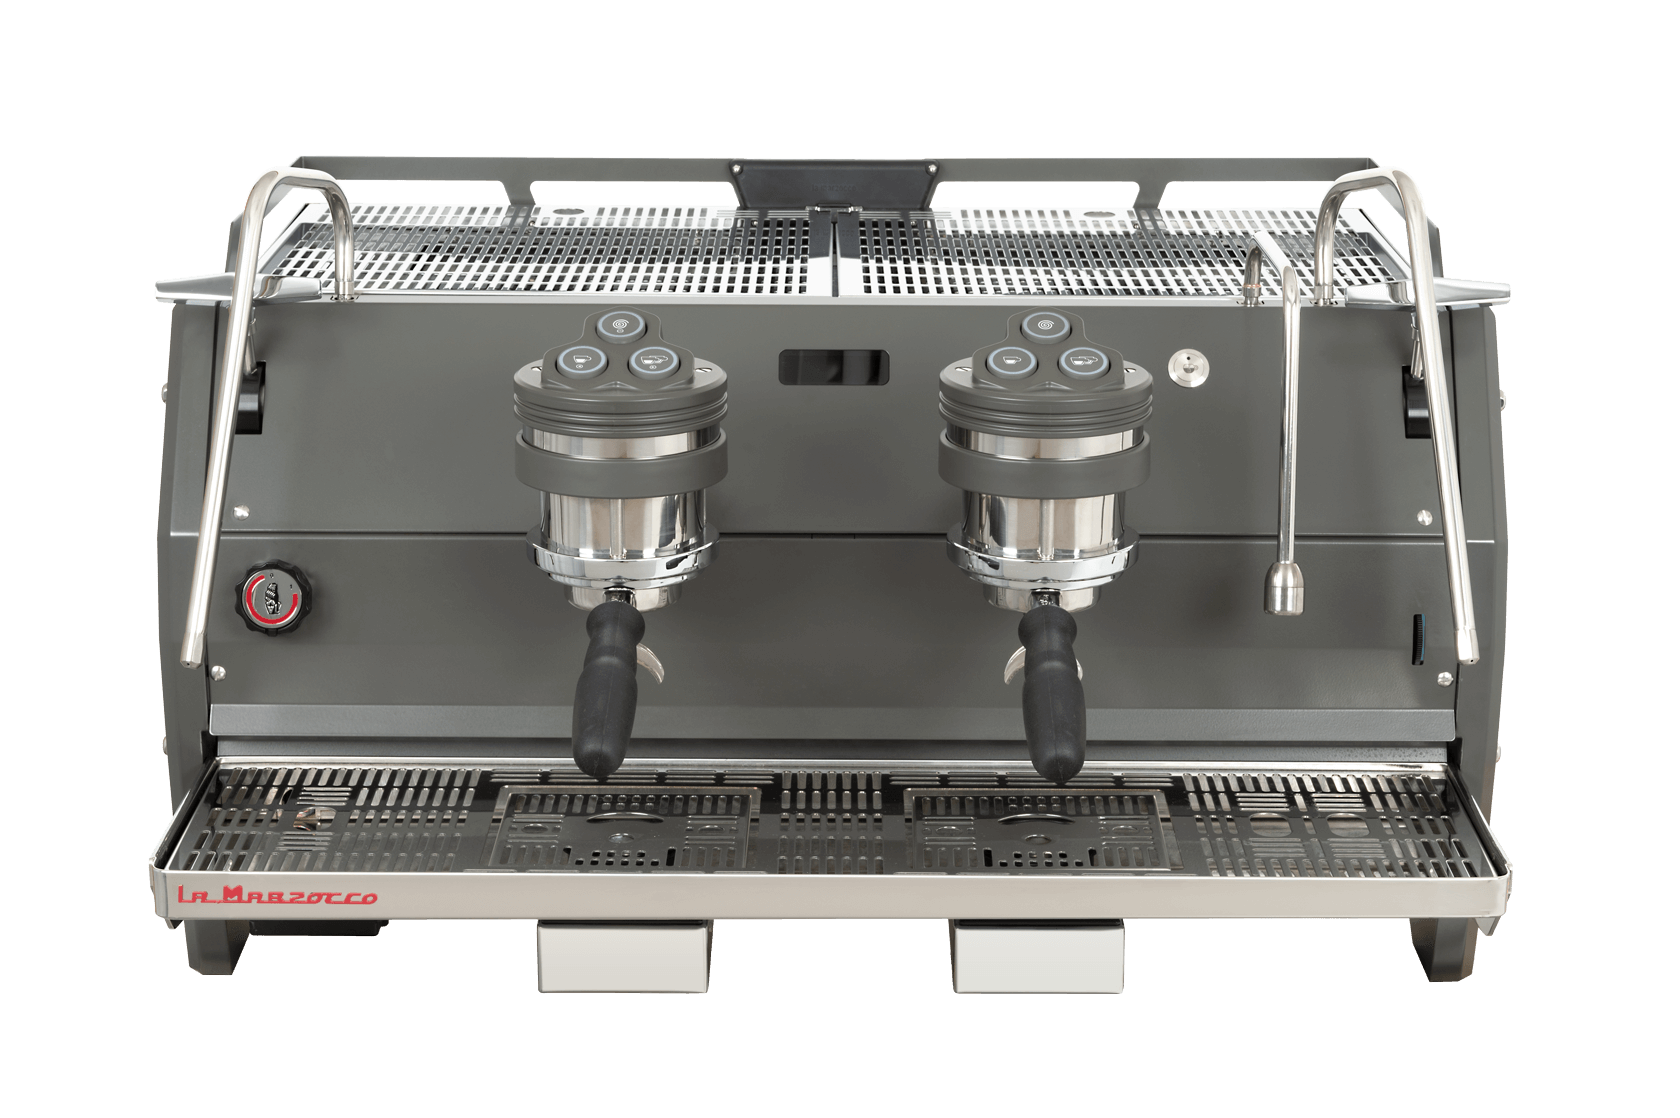 Strada S 2G espresso machine